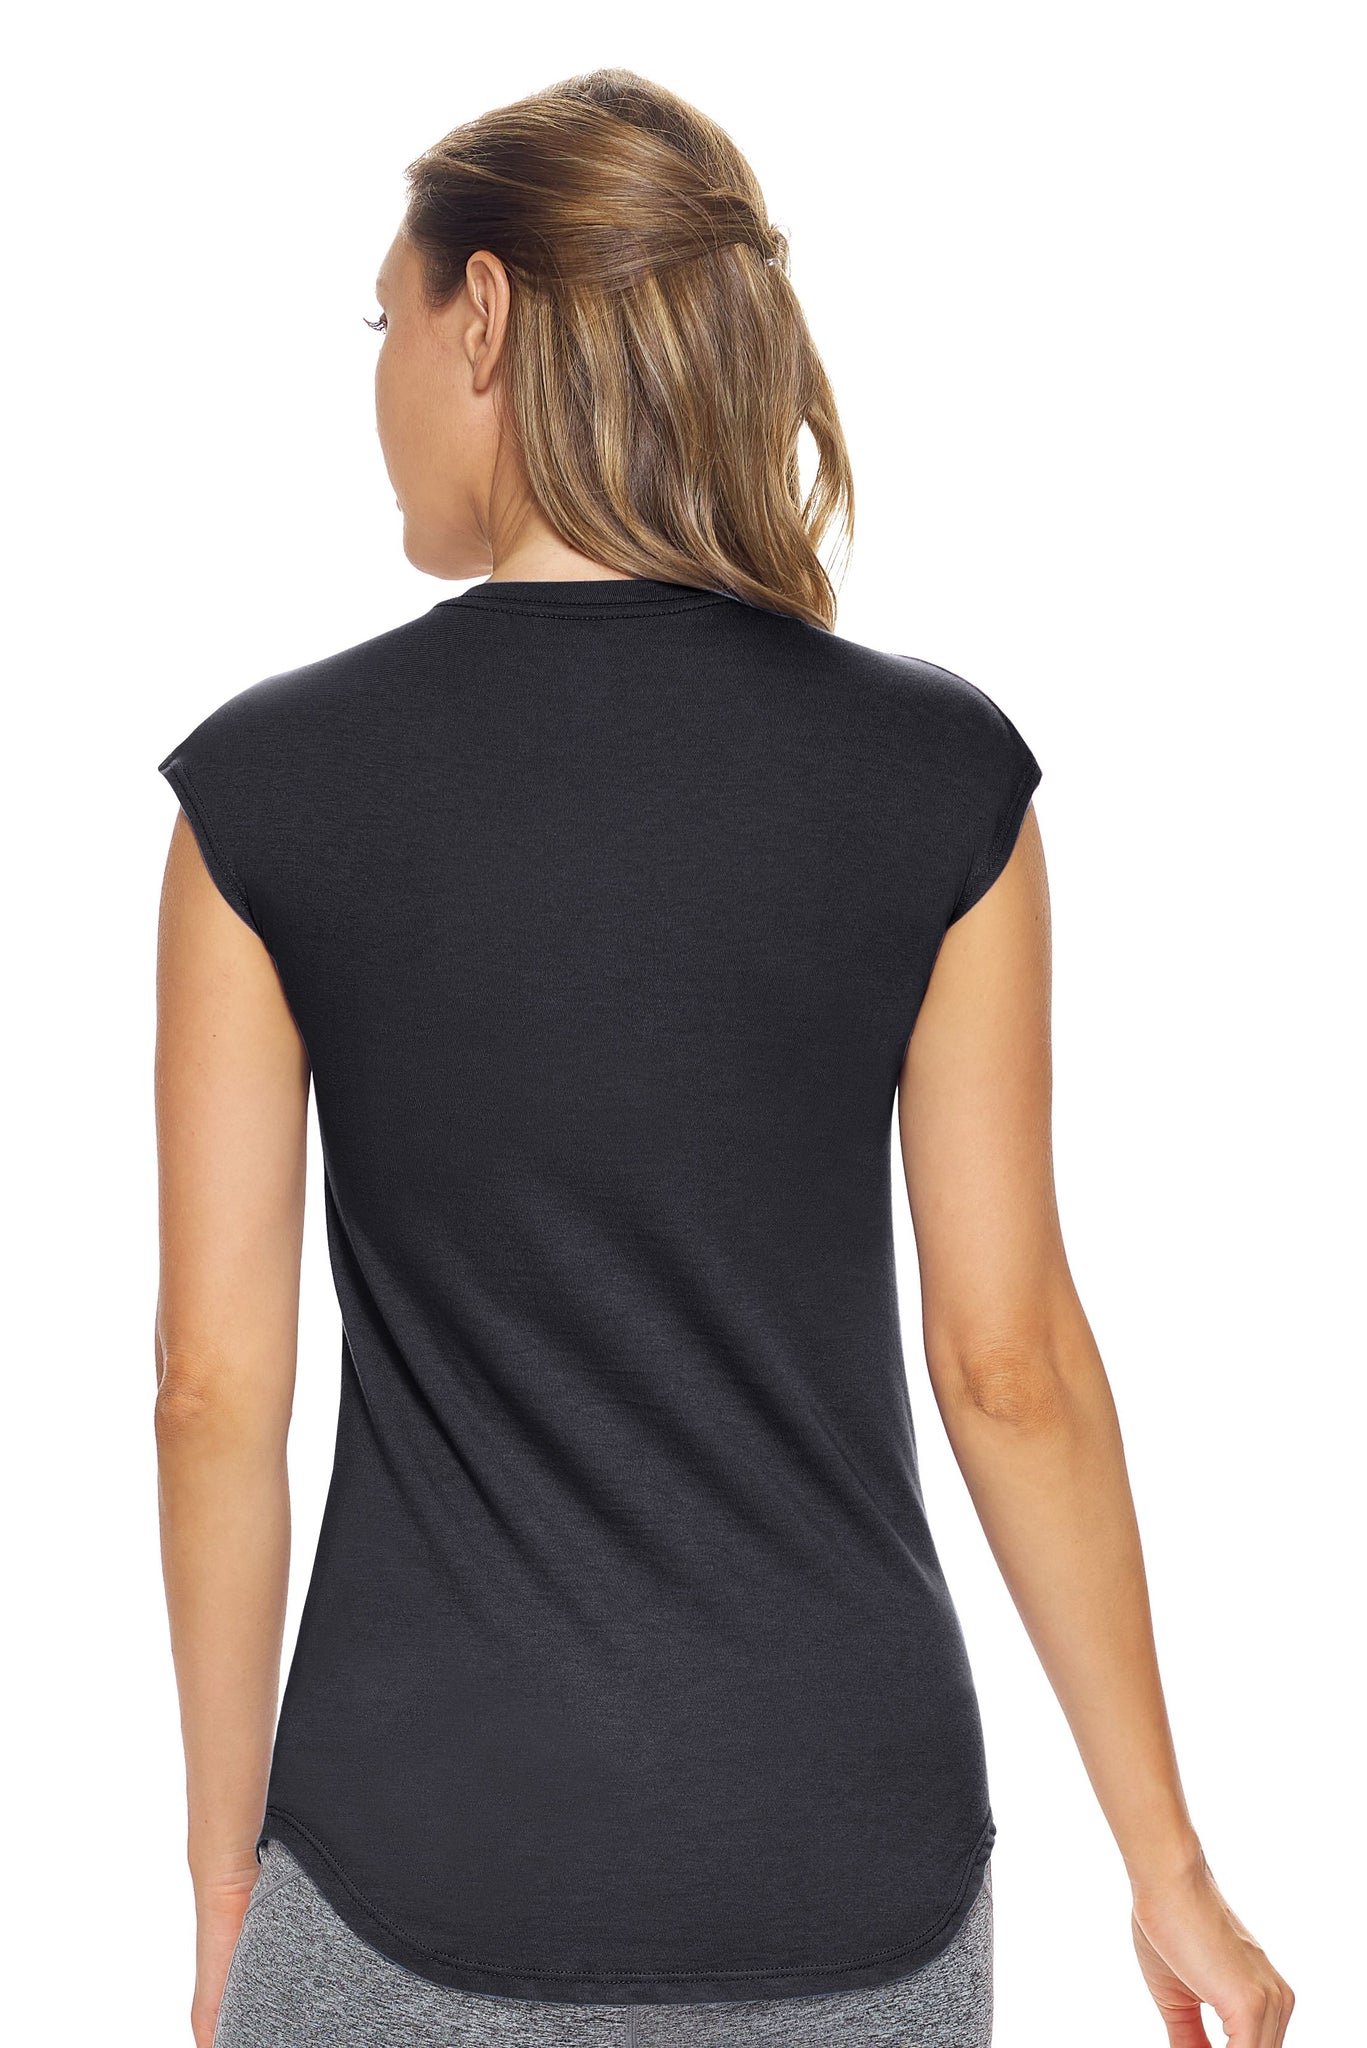 Expert Brand Wholesale Women's MoCA™ Cap Sleeve Tee in Black image 3#black